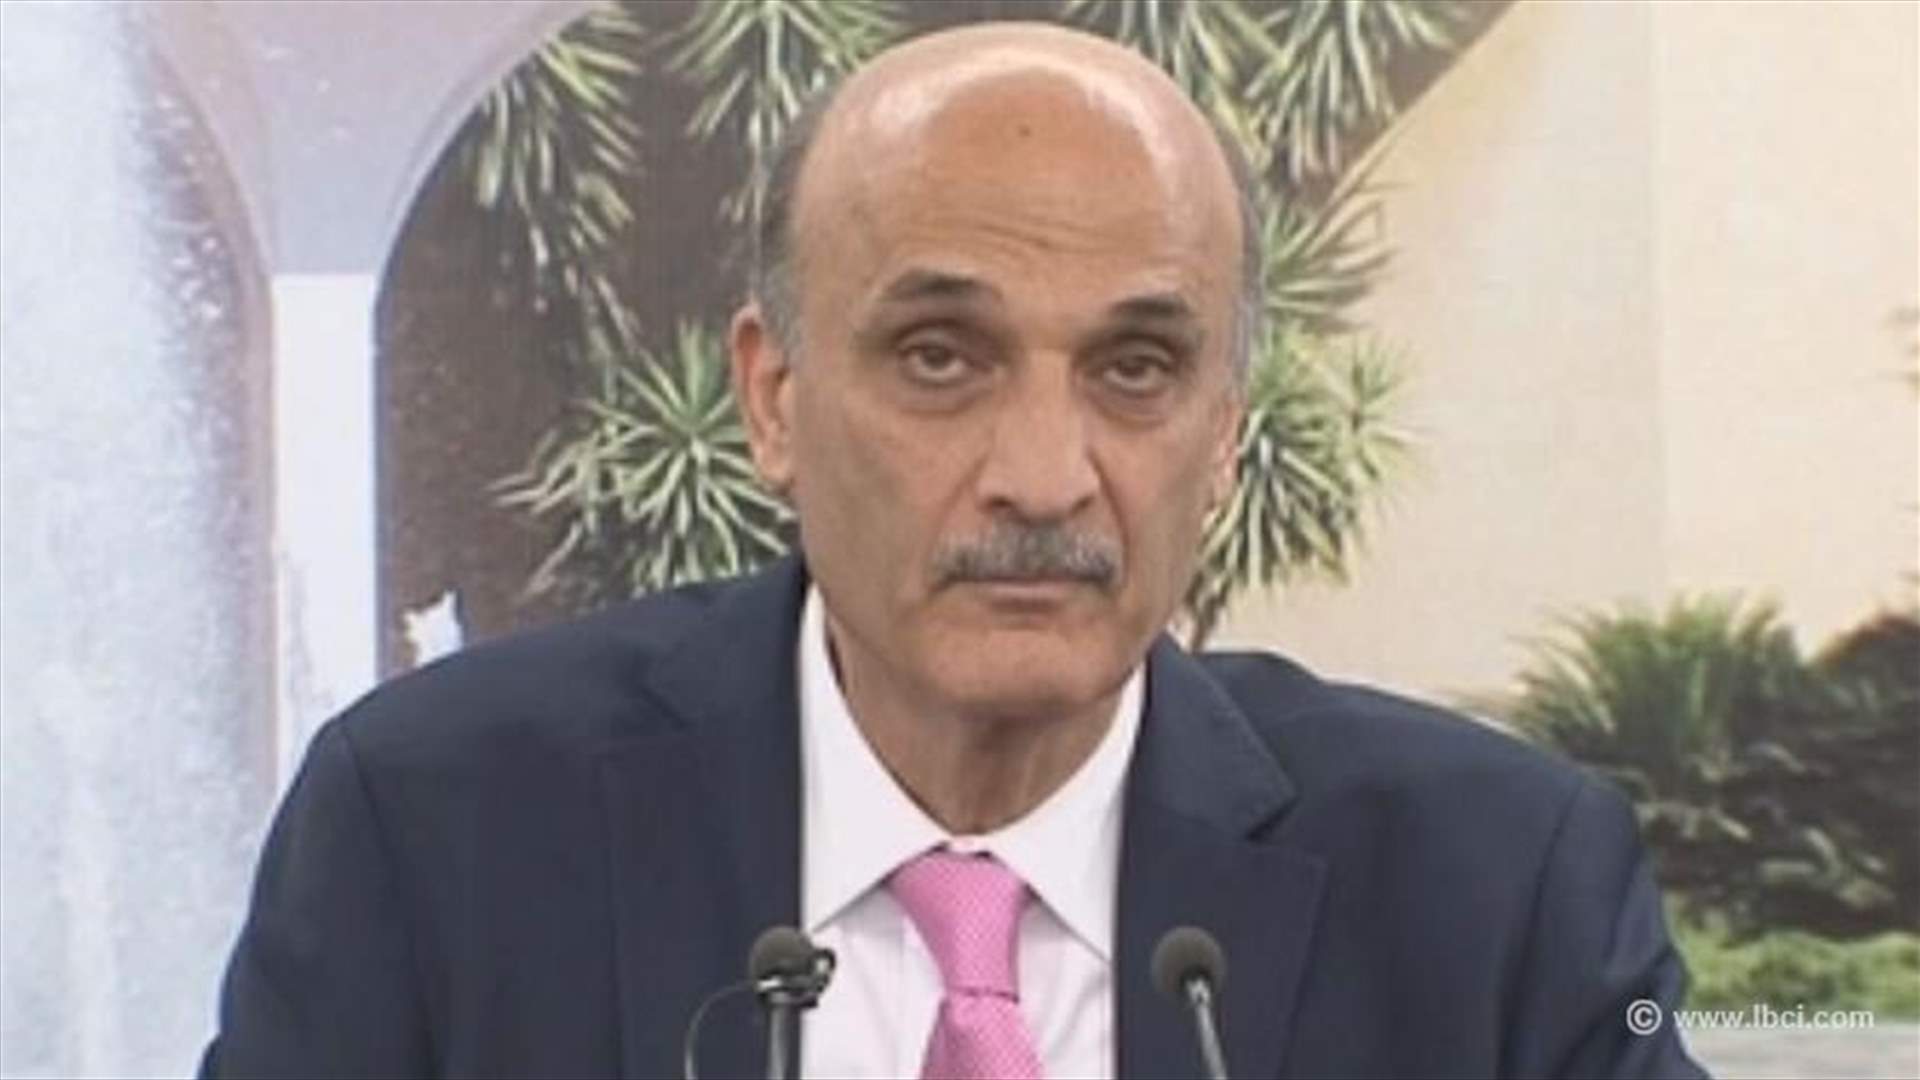 Geagea says Aoun’s speech “very promising”